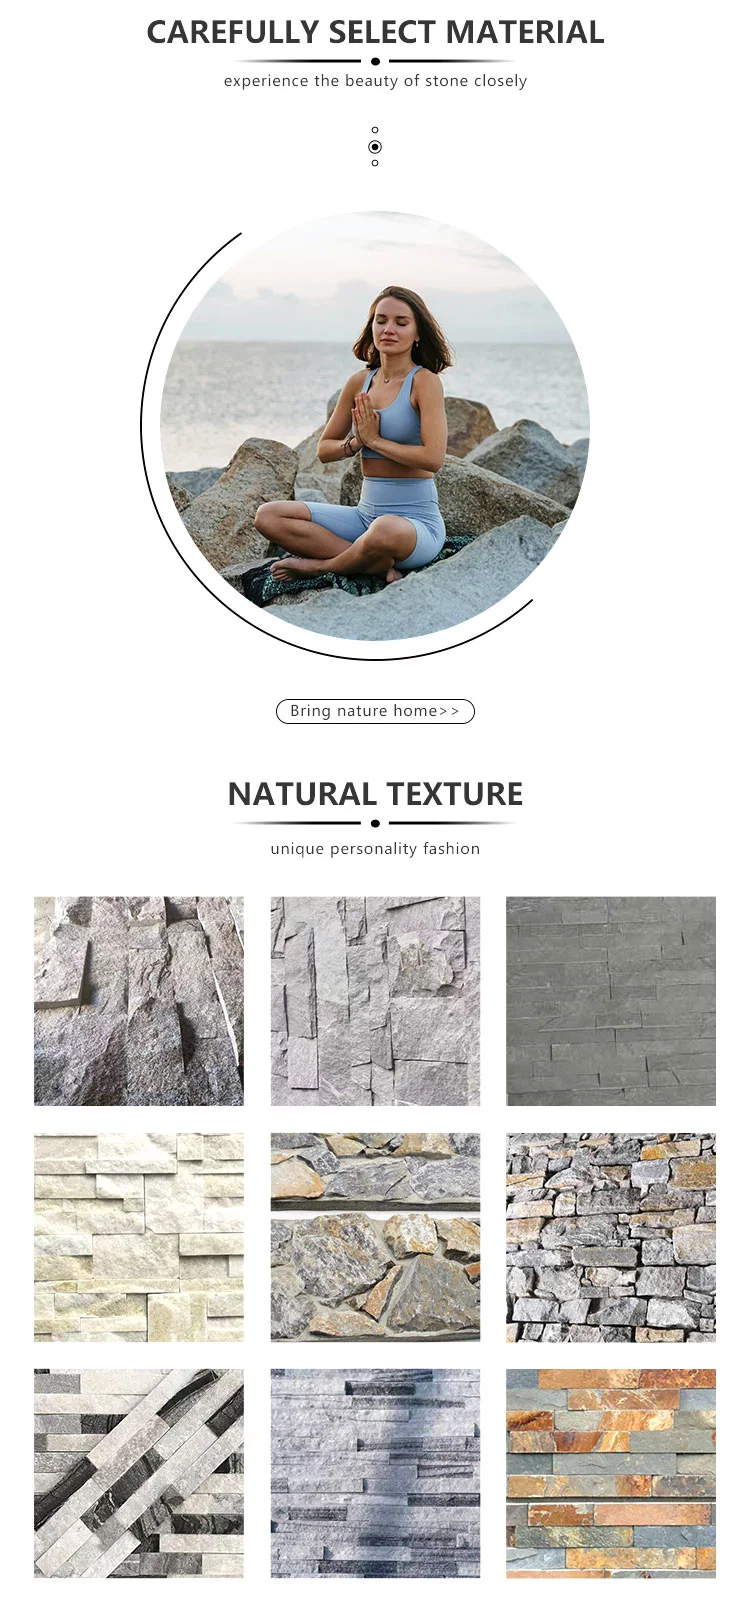 Blve European House Decoration Natural Culture Stone Cladding Tiles Exterior Slate Wall Panels